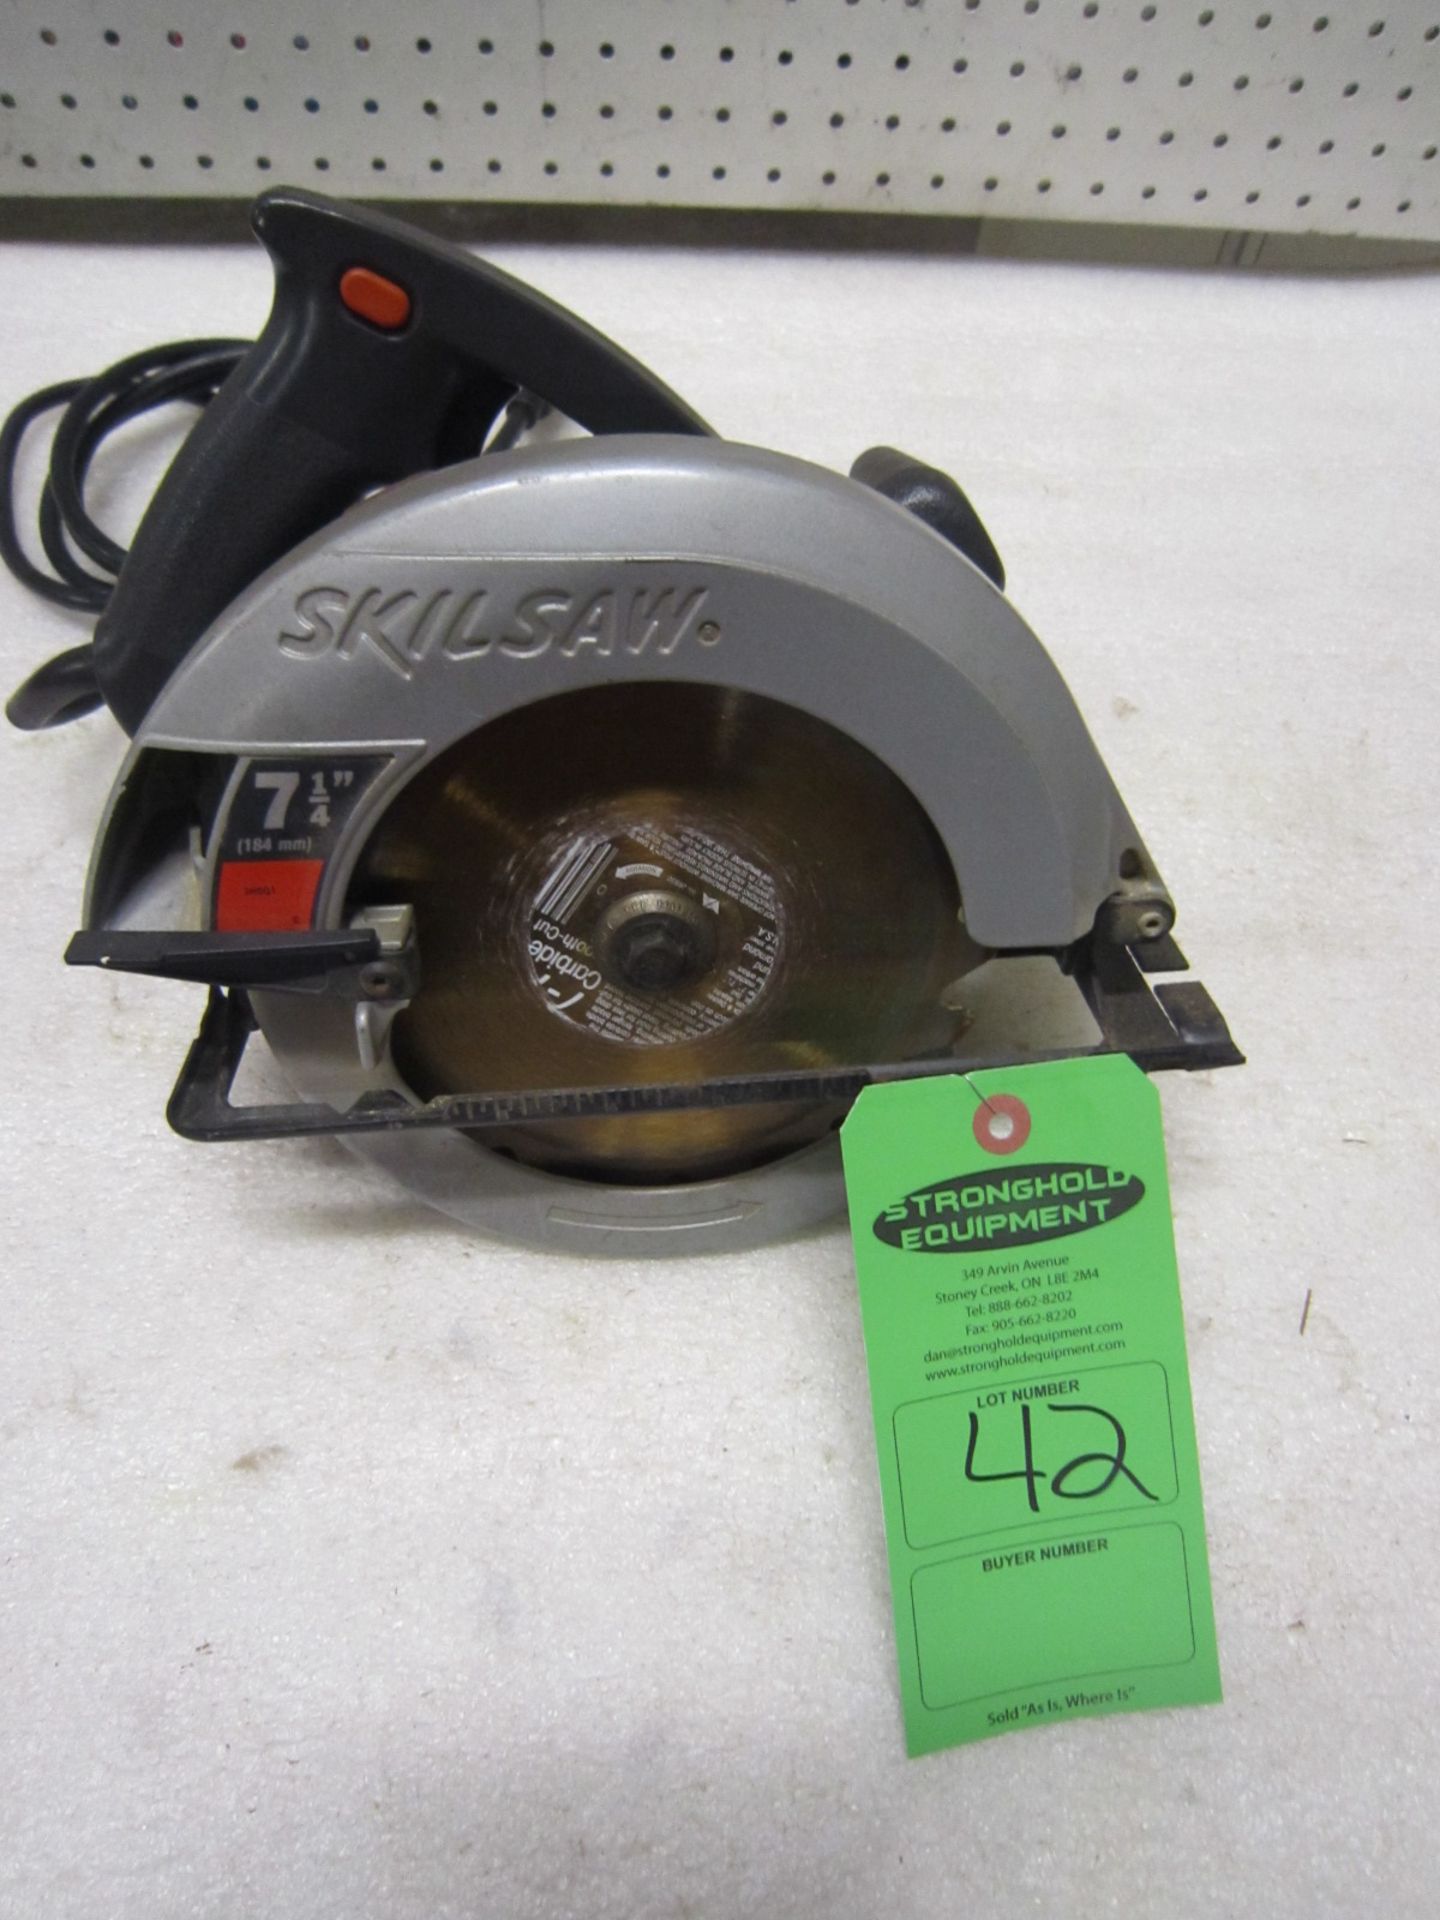 Skilsaw 7.25" model 5150 Circular Saw - Electric